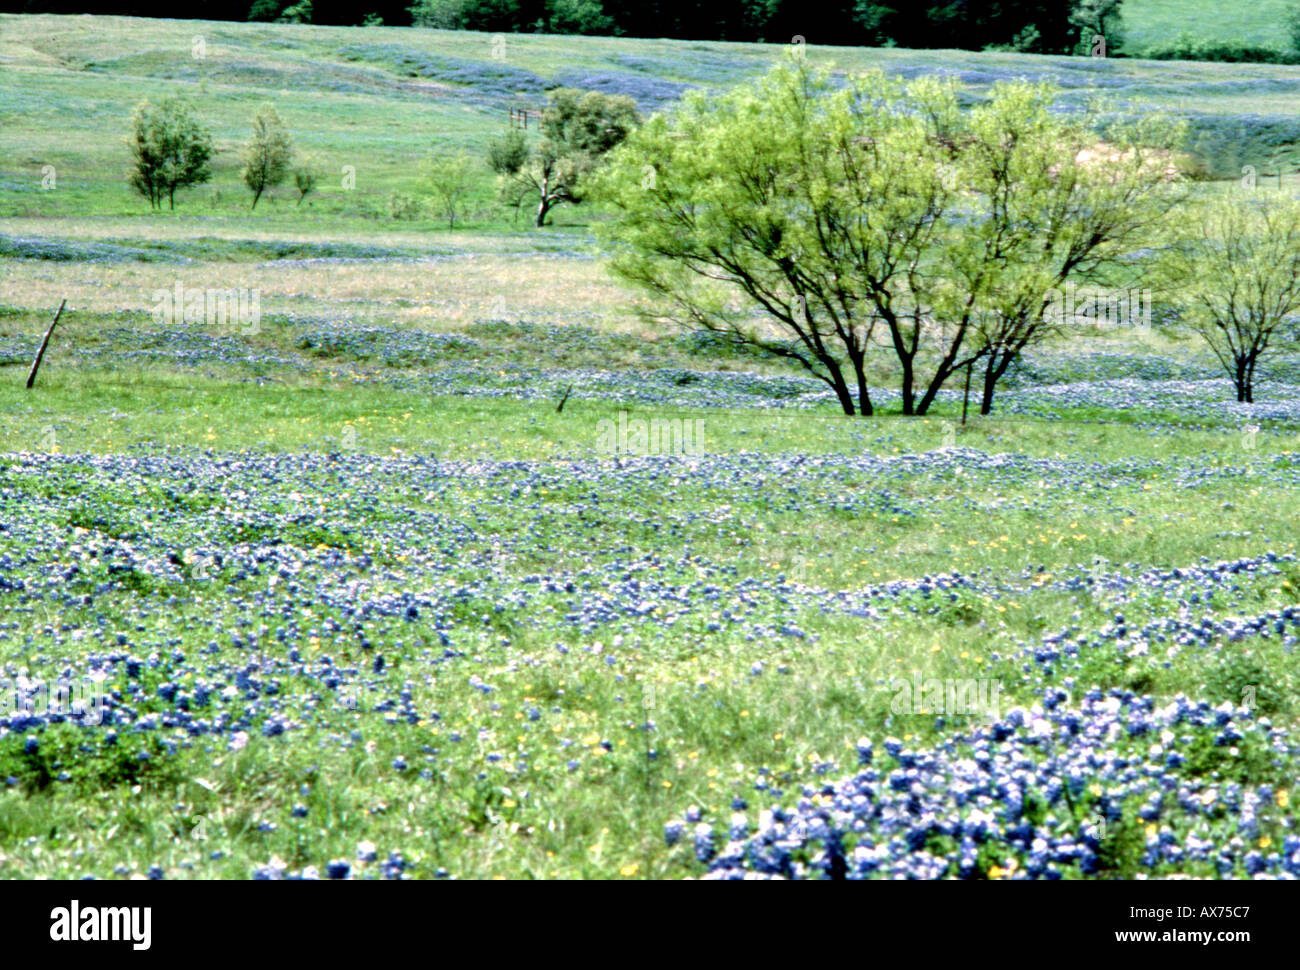 Field of Texas Blue Bonnet columbine flower Stock Photo - Alamy